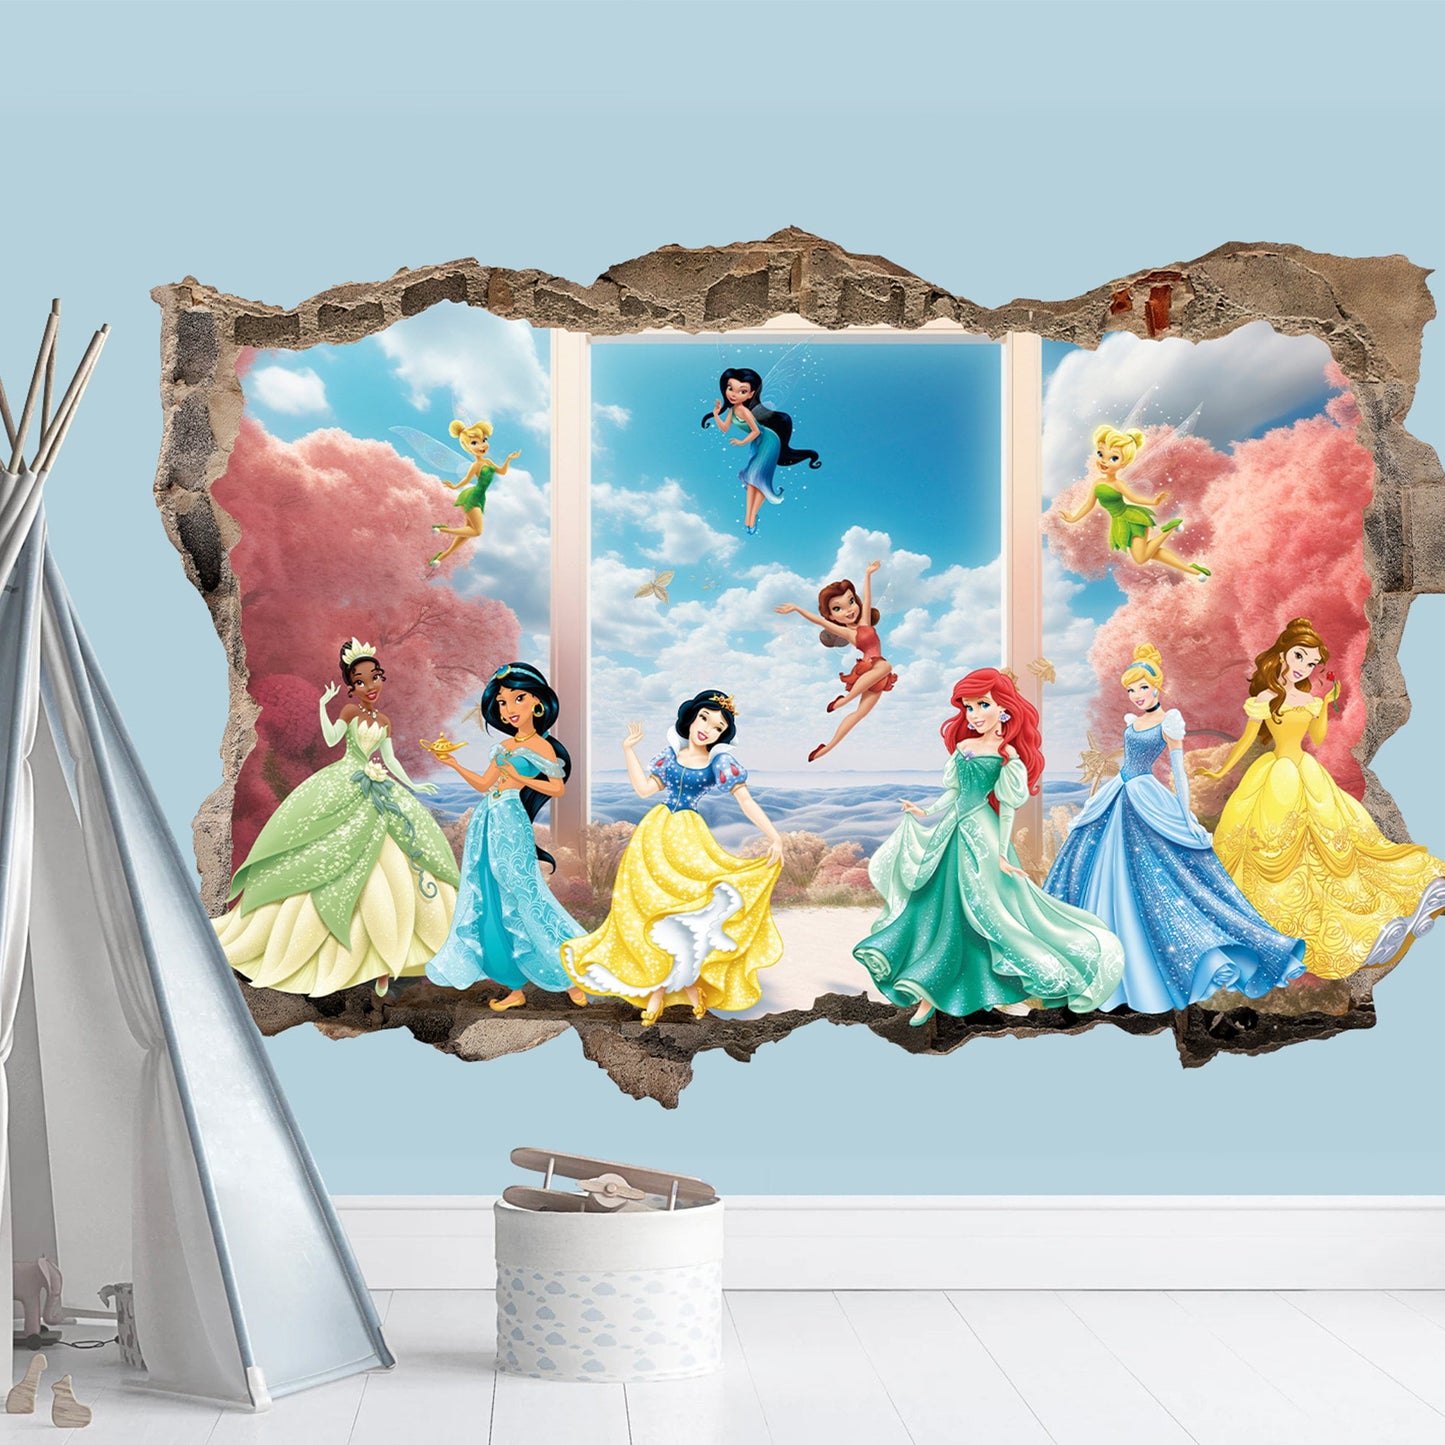 3D Princess Castle Wall Decal - Six Beautiful Princesses, Four Playful Fairy Florals, Room Decor - BW020